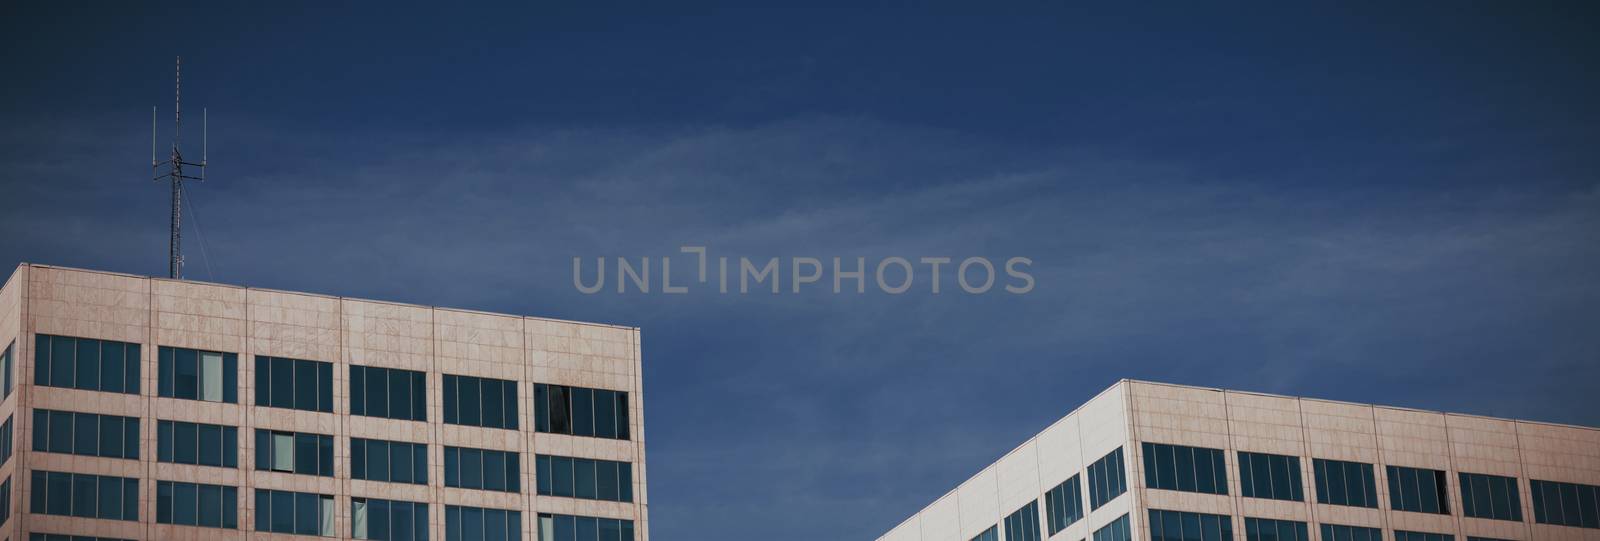 View of office buildings against blue sky  by Wavebreakmedia